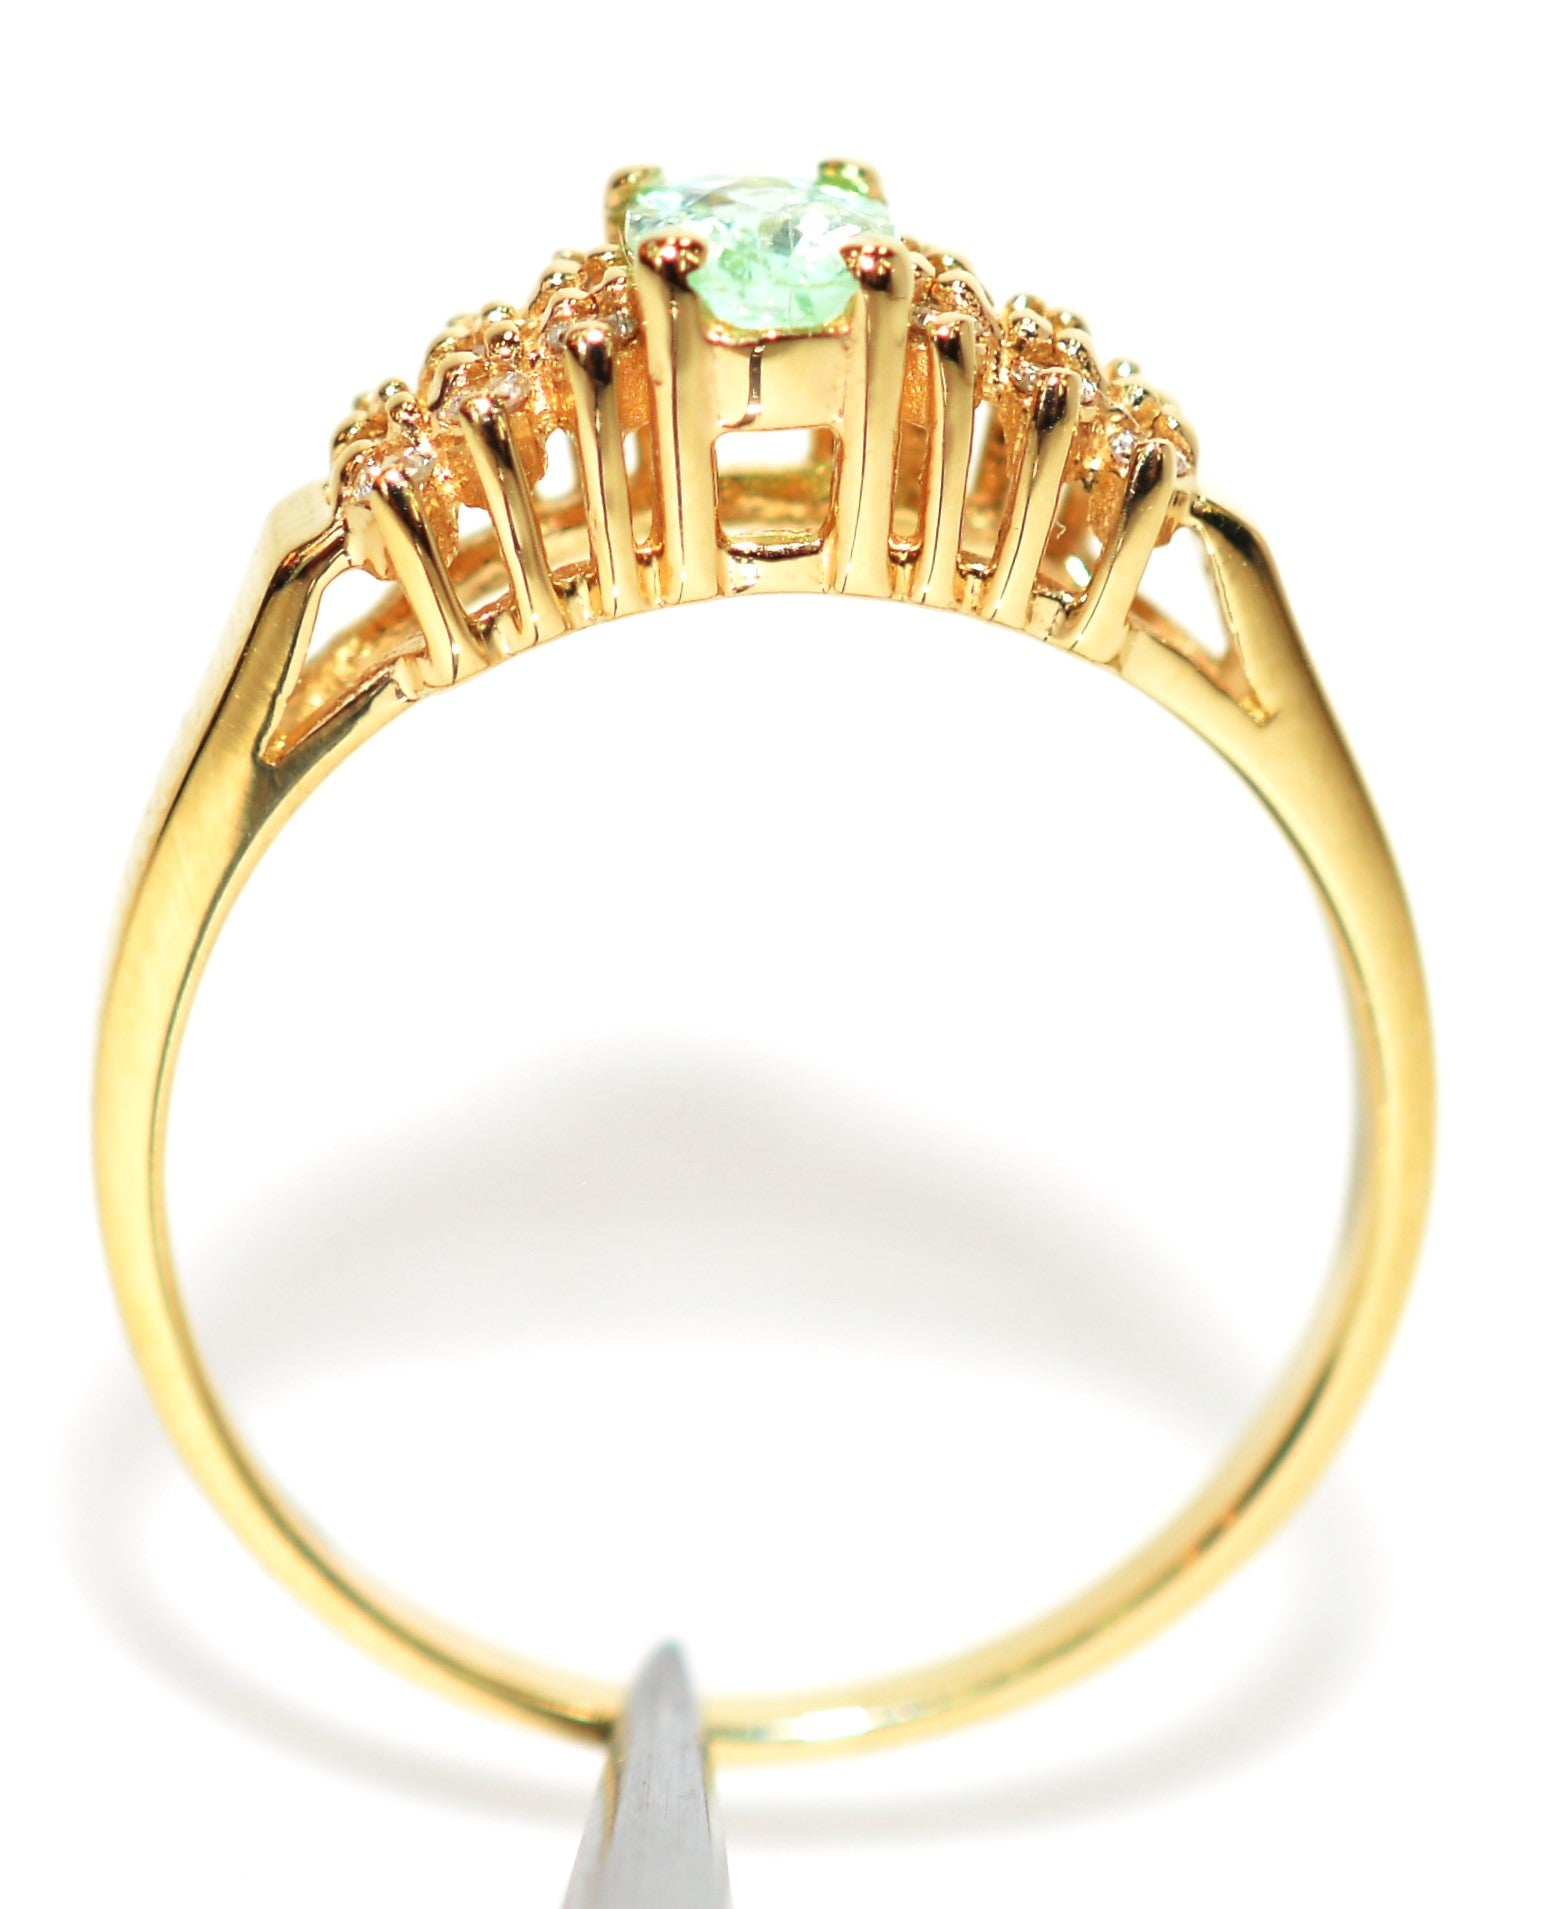 Natural Paraiba Tourmaline & Diamond Ring 14K Solid Gold .76tcw Cluster Ring Gemstone Ring Birthstone Ring Cocktail Ring Statement Ring